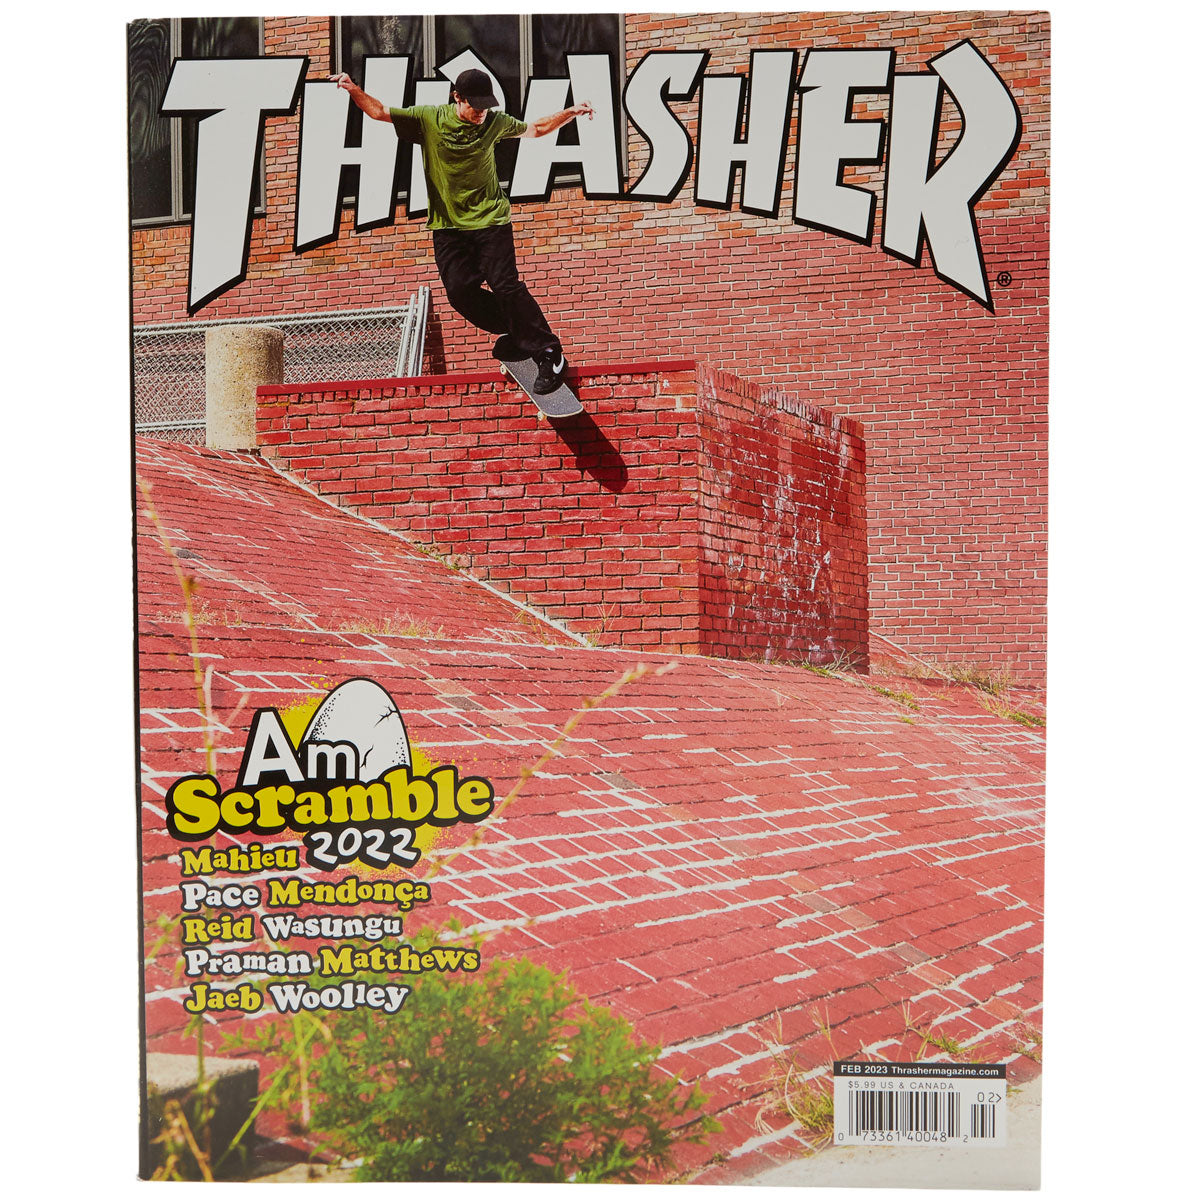 Thrasher Magazine February 2023 - Am Scramble